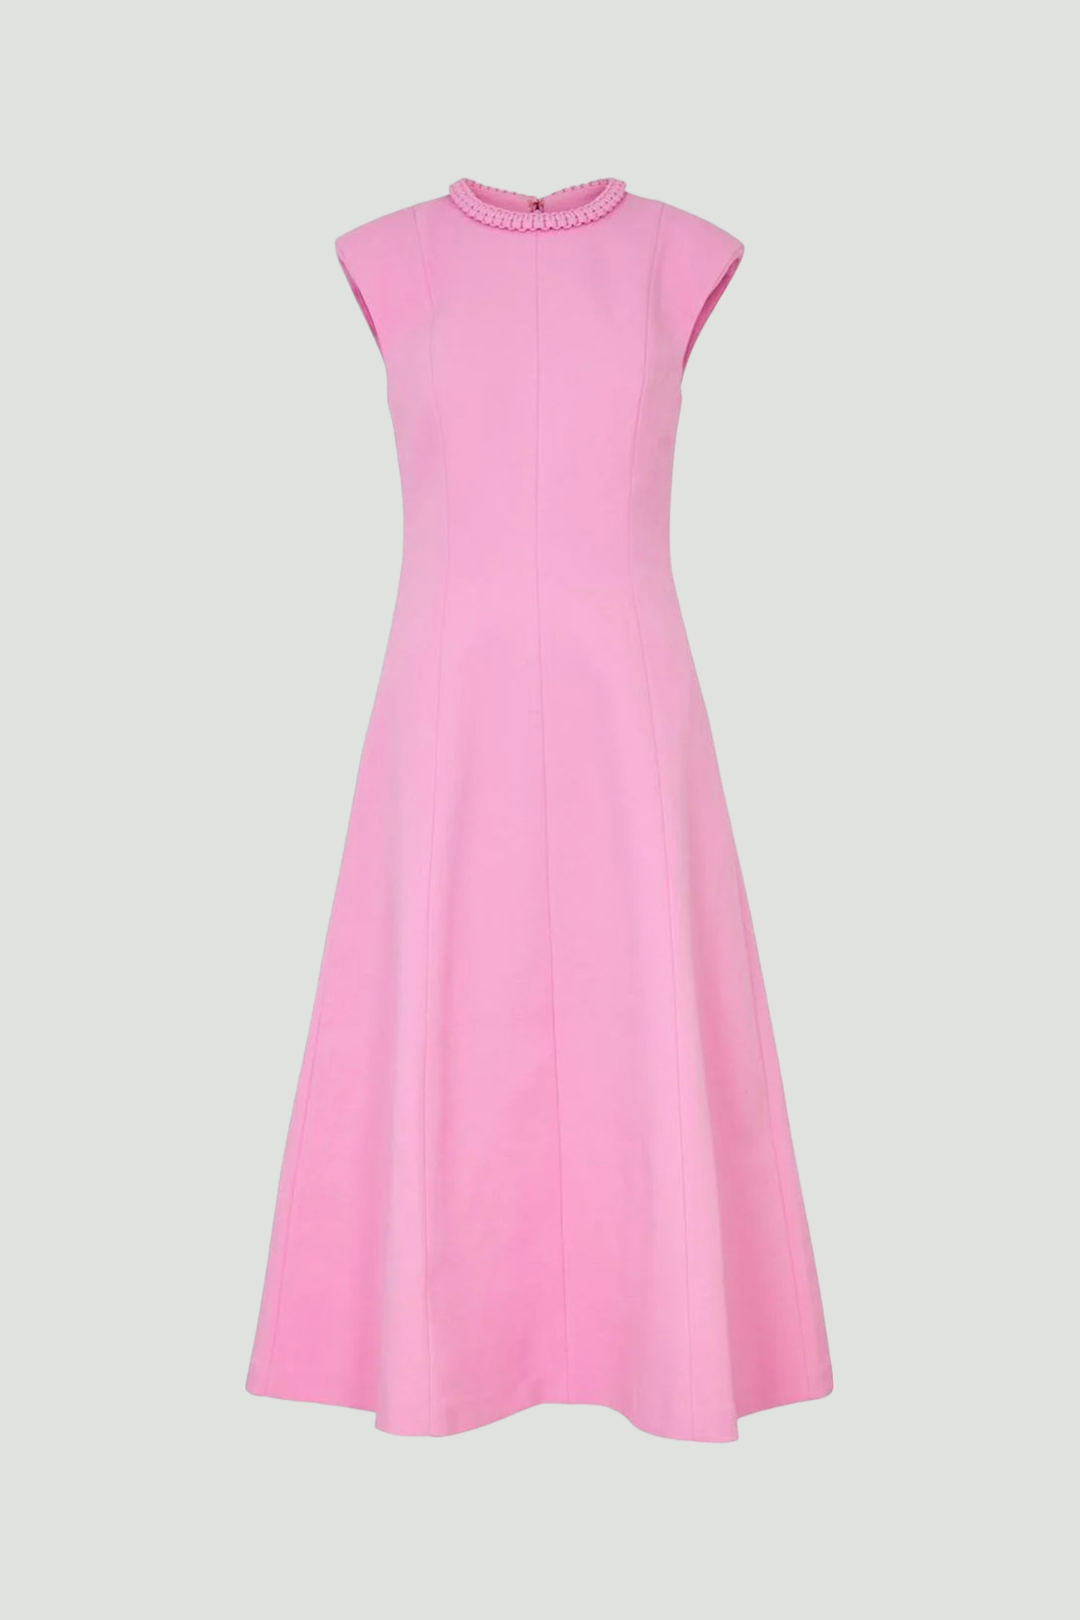 Rebecca Vallance in Pink Rochelle Sleeveless Midi Dress